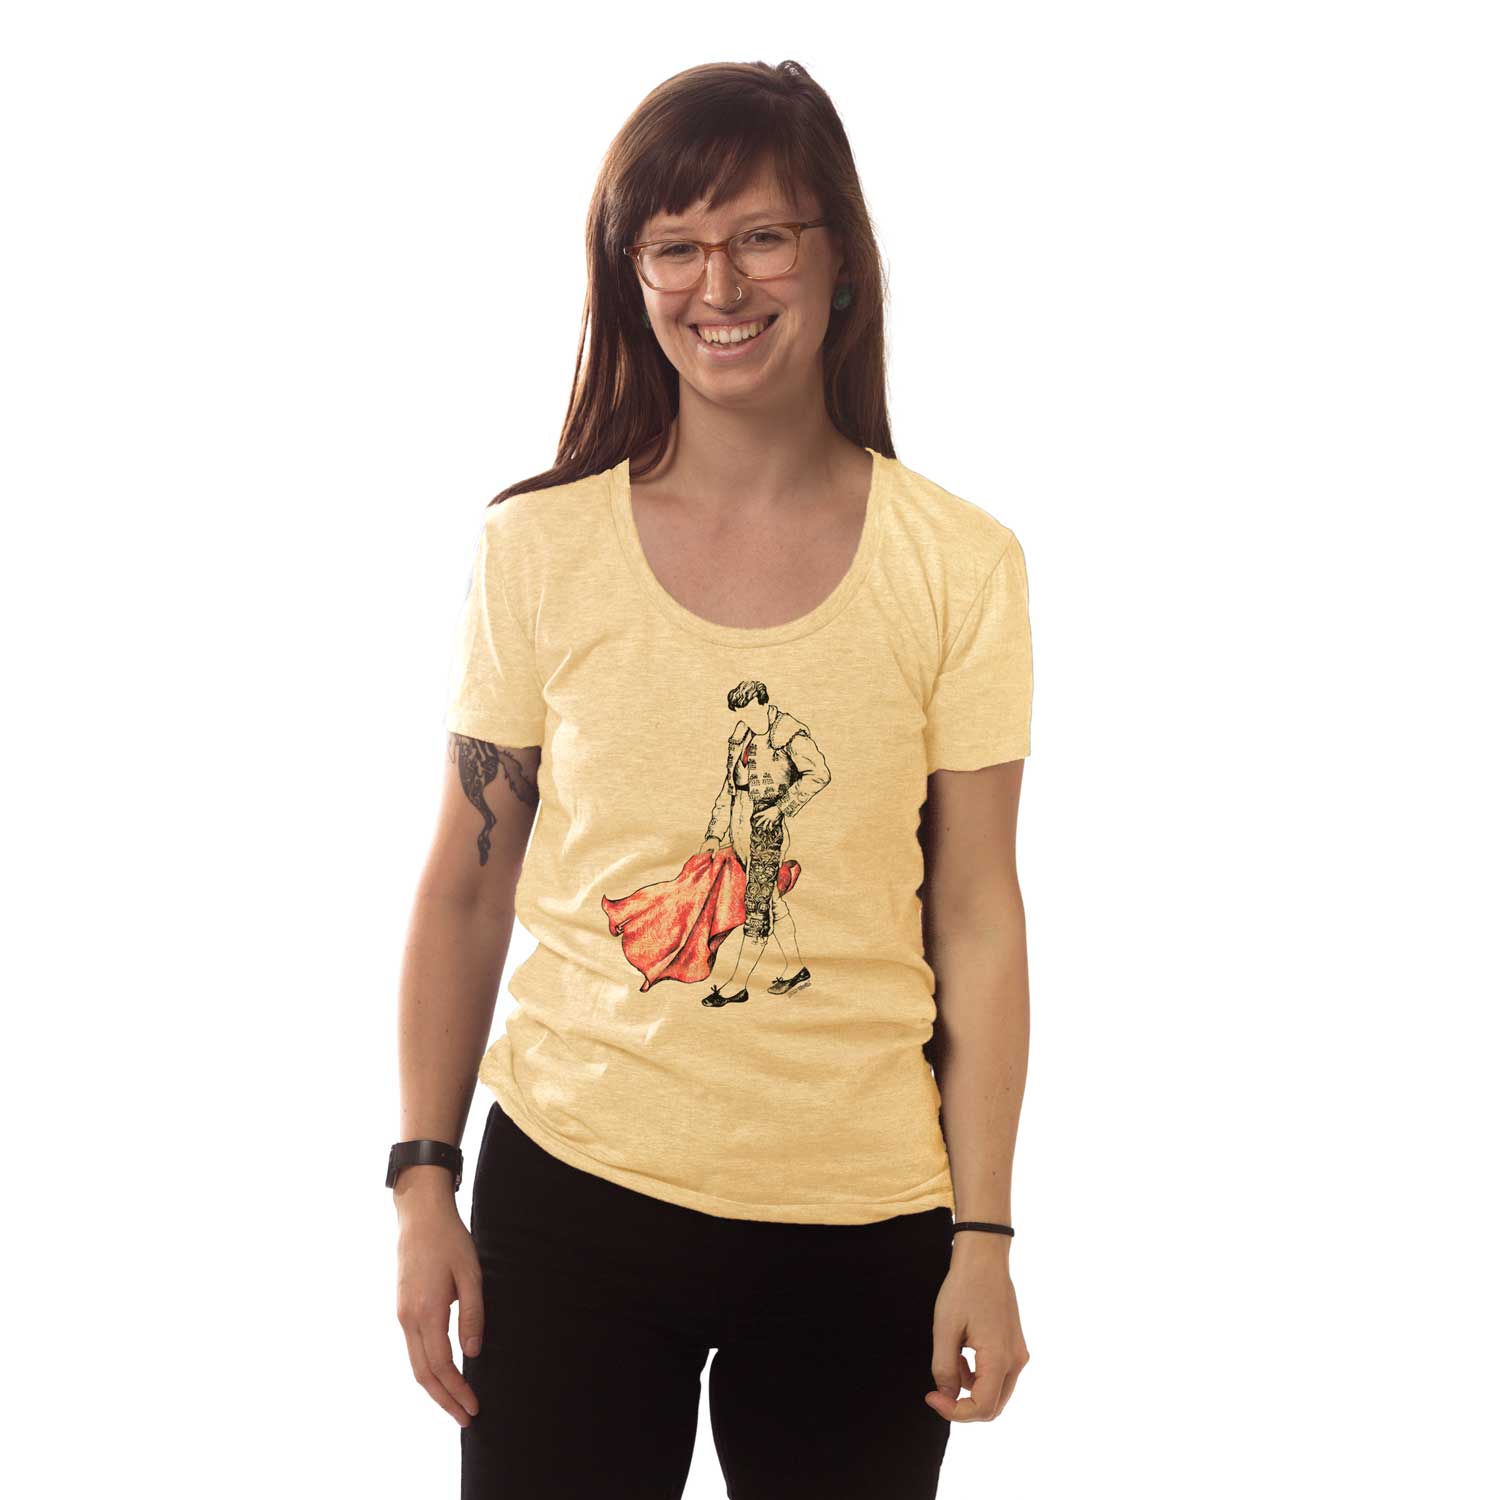 Women's Matador Cool Torero Graphic T-Shirt | Vintage Bull Fighter Tee | Solid Threads